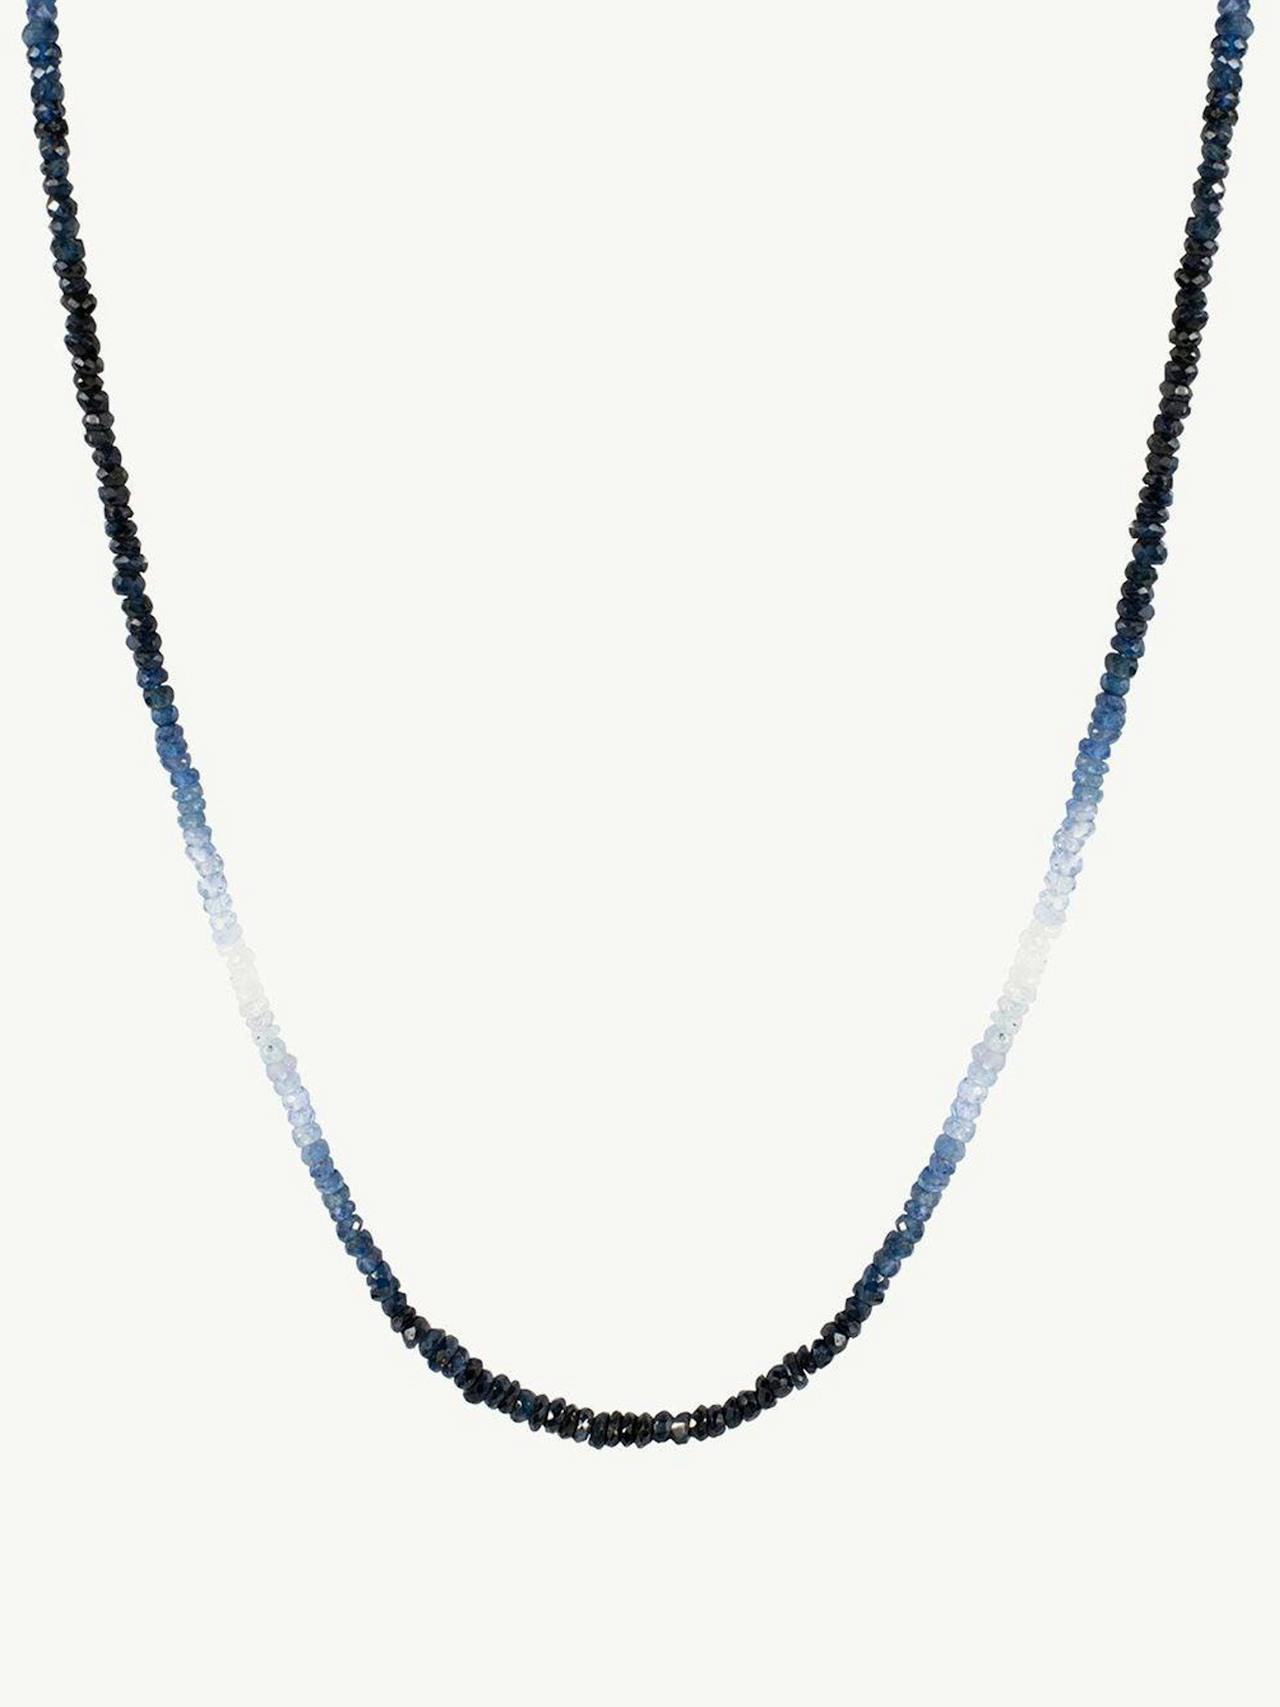 Graduated blue sapphire necklace